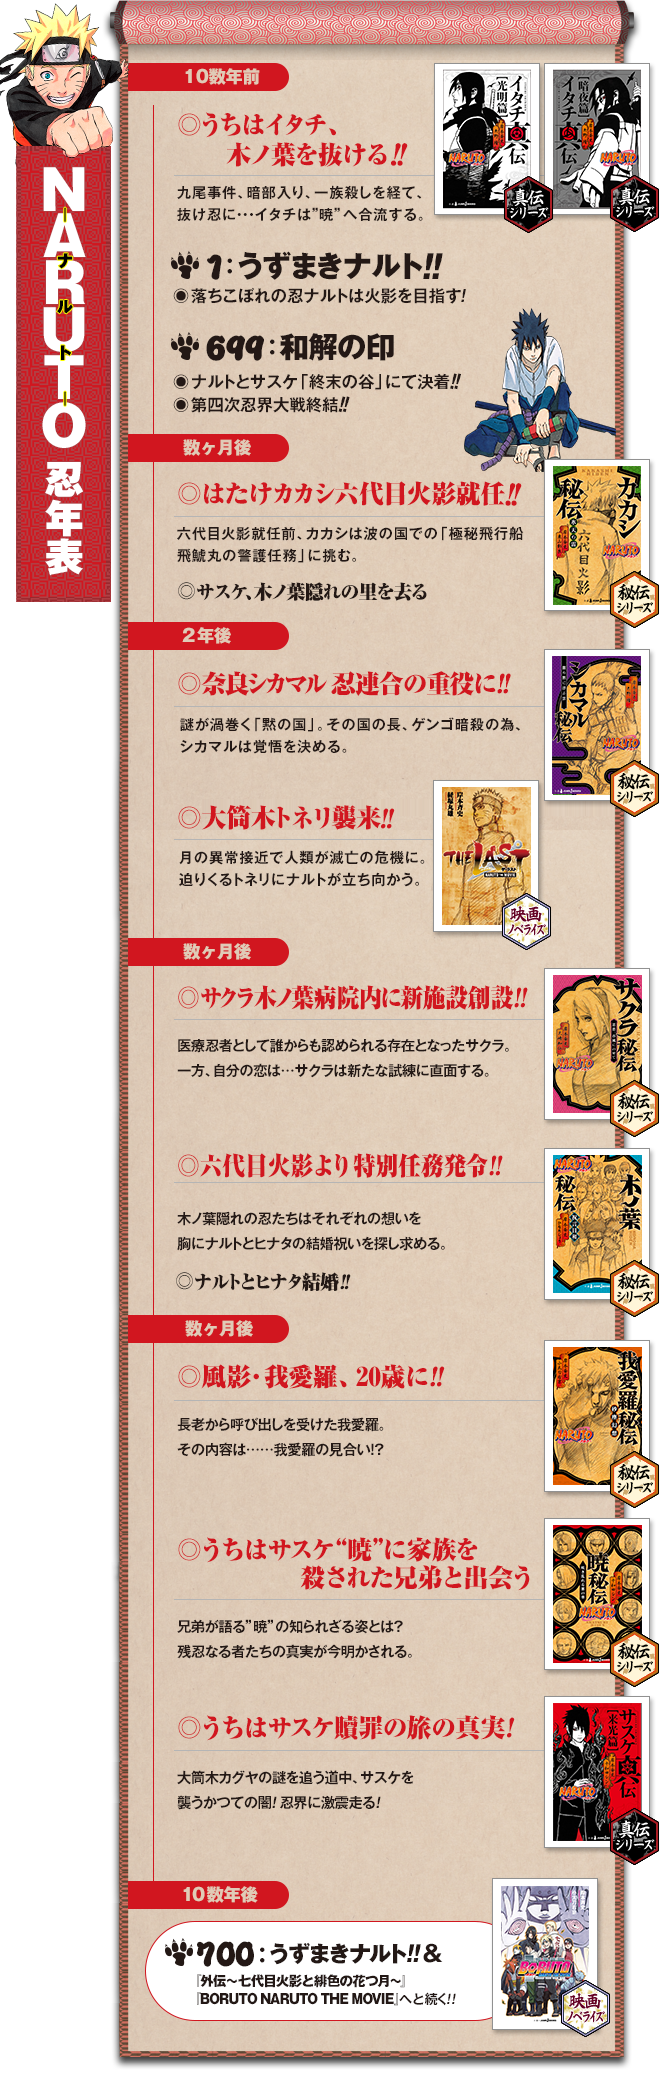 Rinnegan vs Tsukuyomi - Página 3 Latest?cb=20151214225041&path-prefix=pt-br